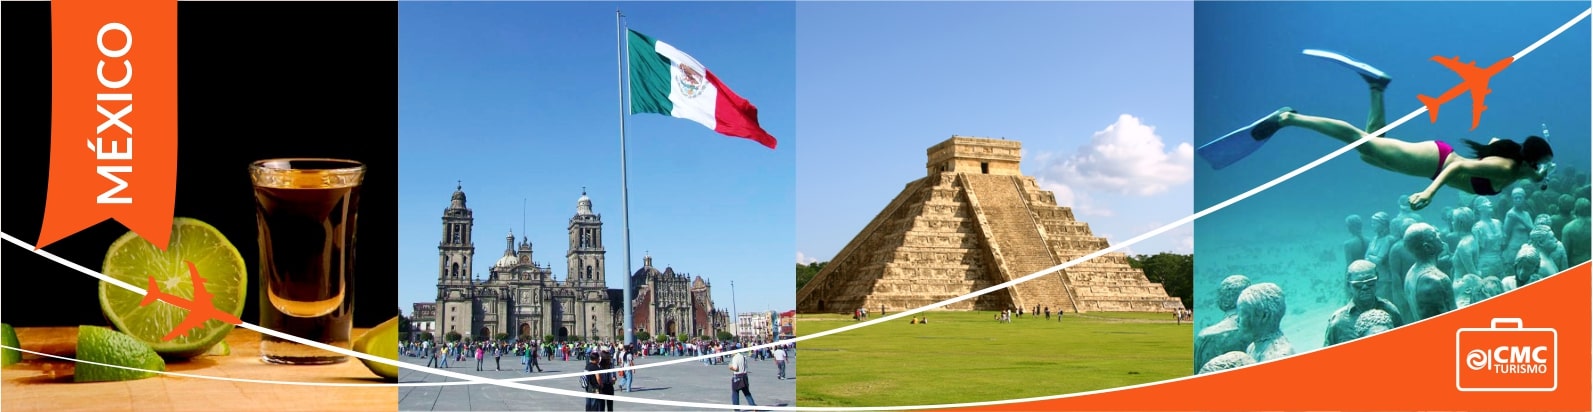 cabecera para pdf excursiones Mexico CMC Turismo-min